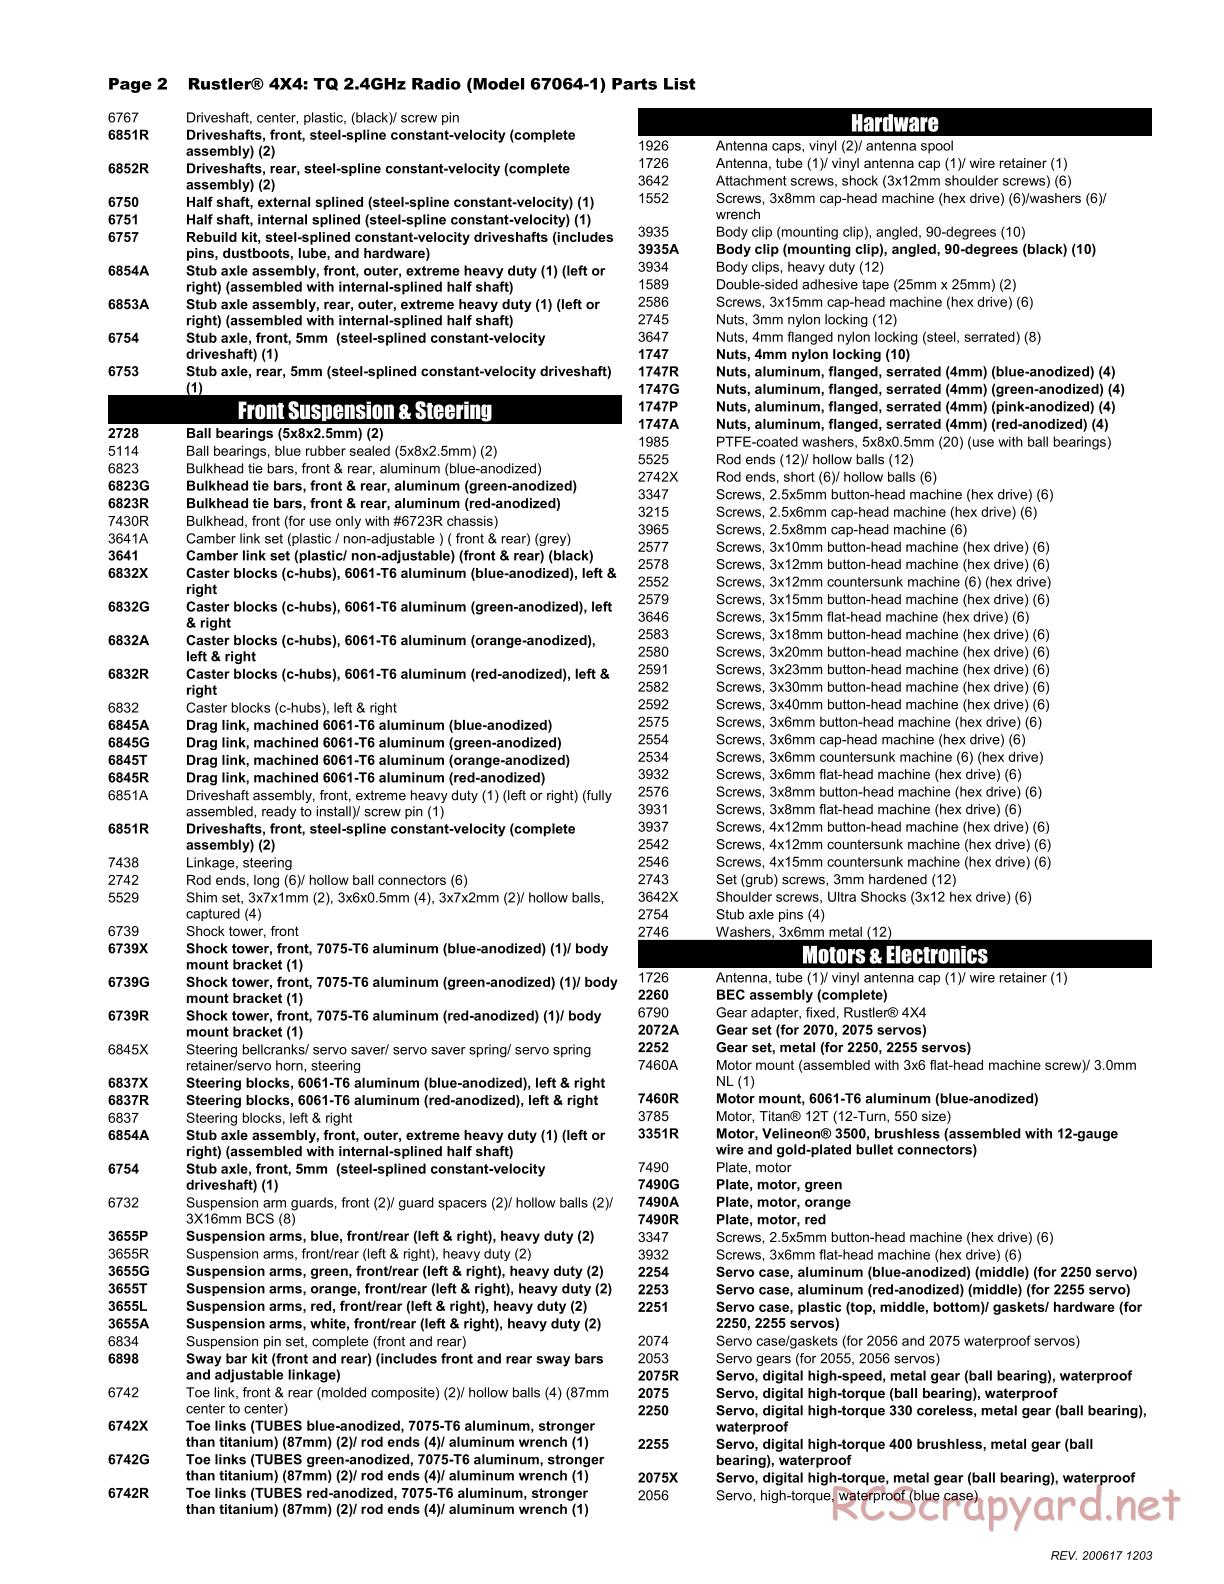 Traxxas - Rustler 4x4 XL-5 - Parts List - Page 2